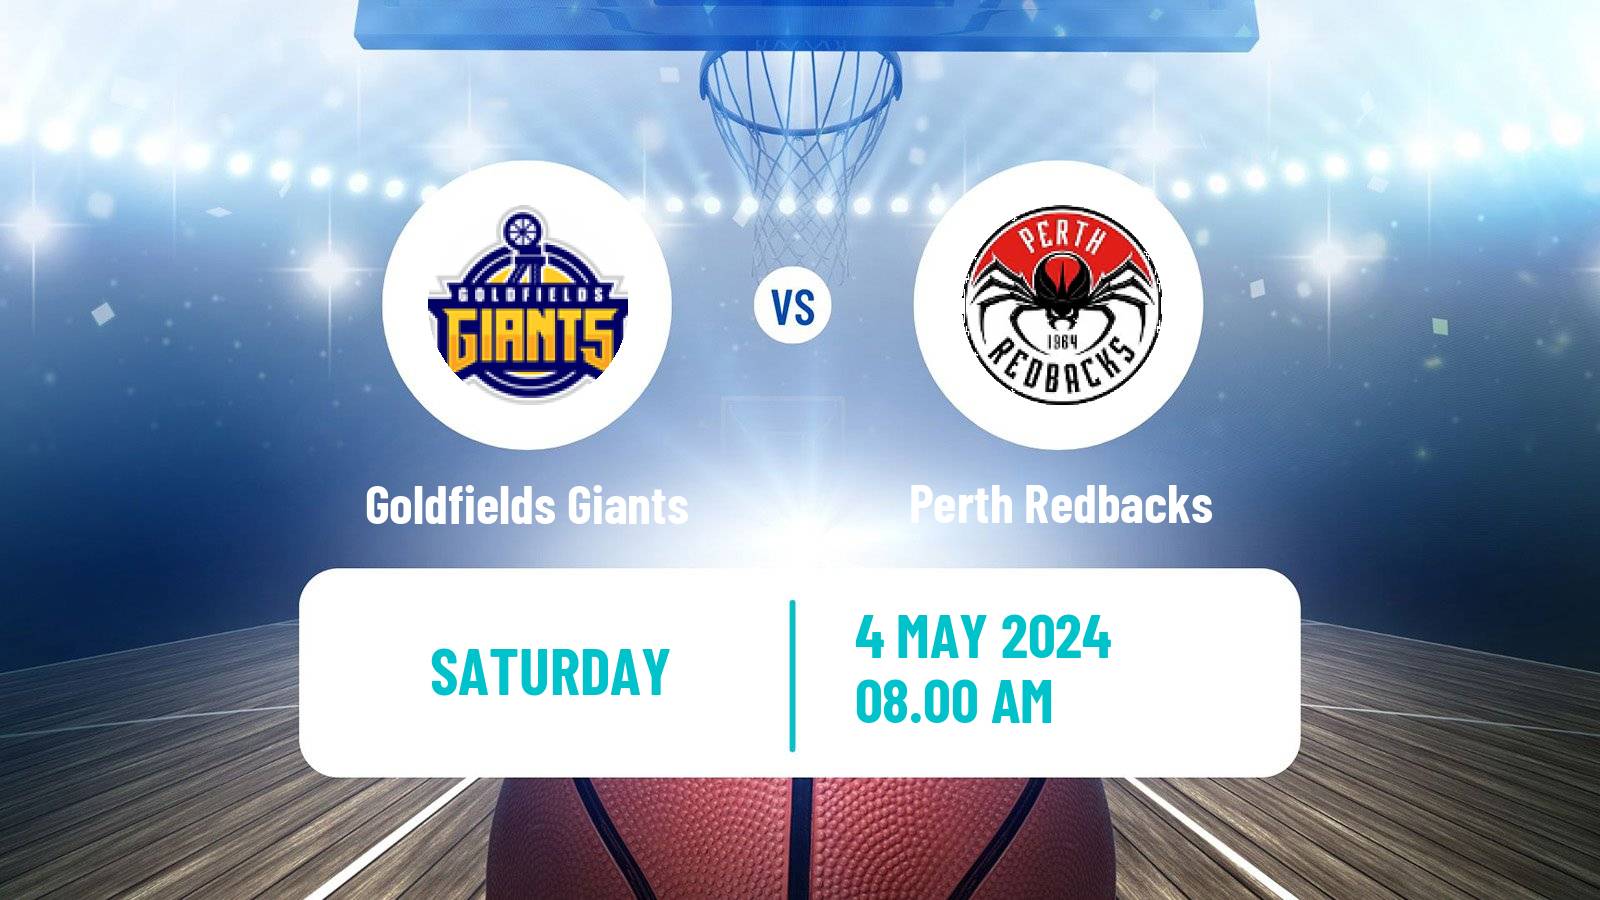 Basketball Australian NBL1 West Goldfields Giants - Perth Redbacks